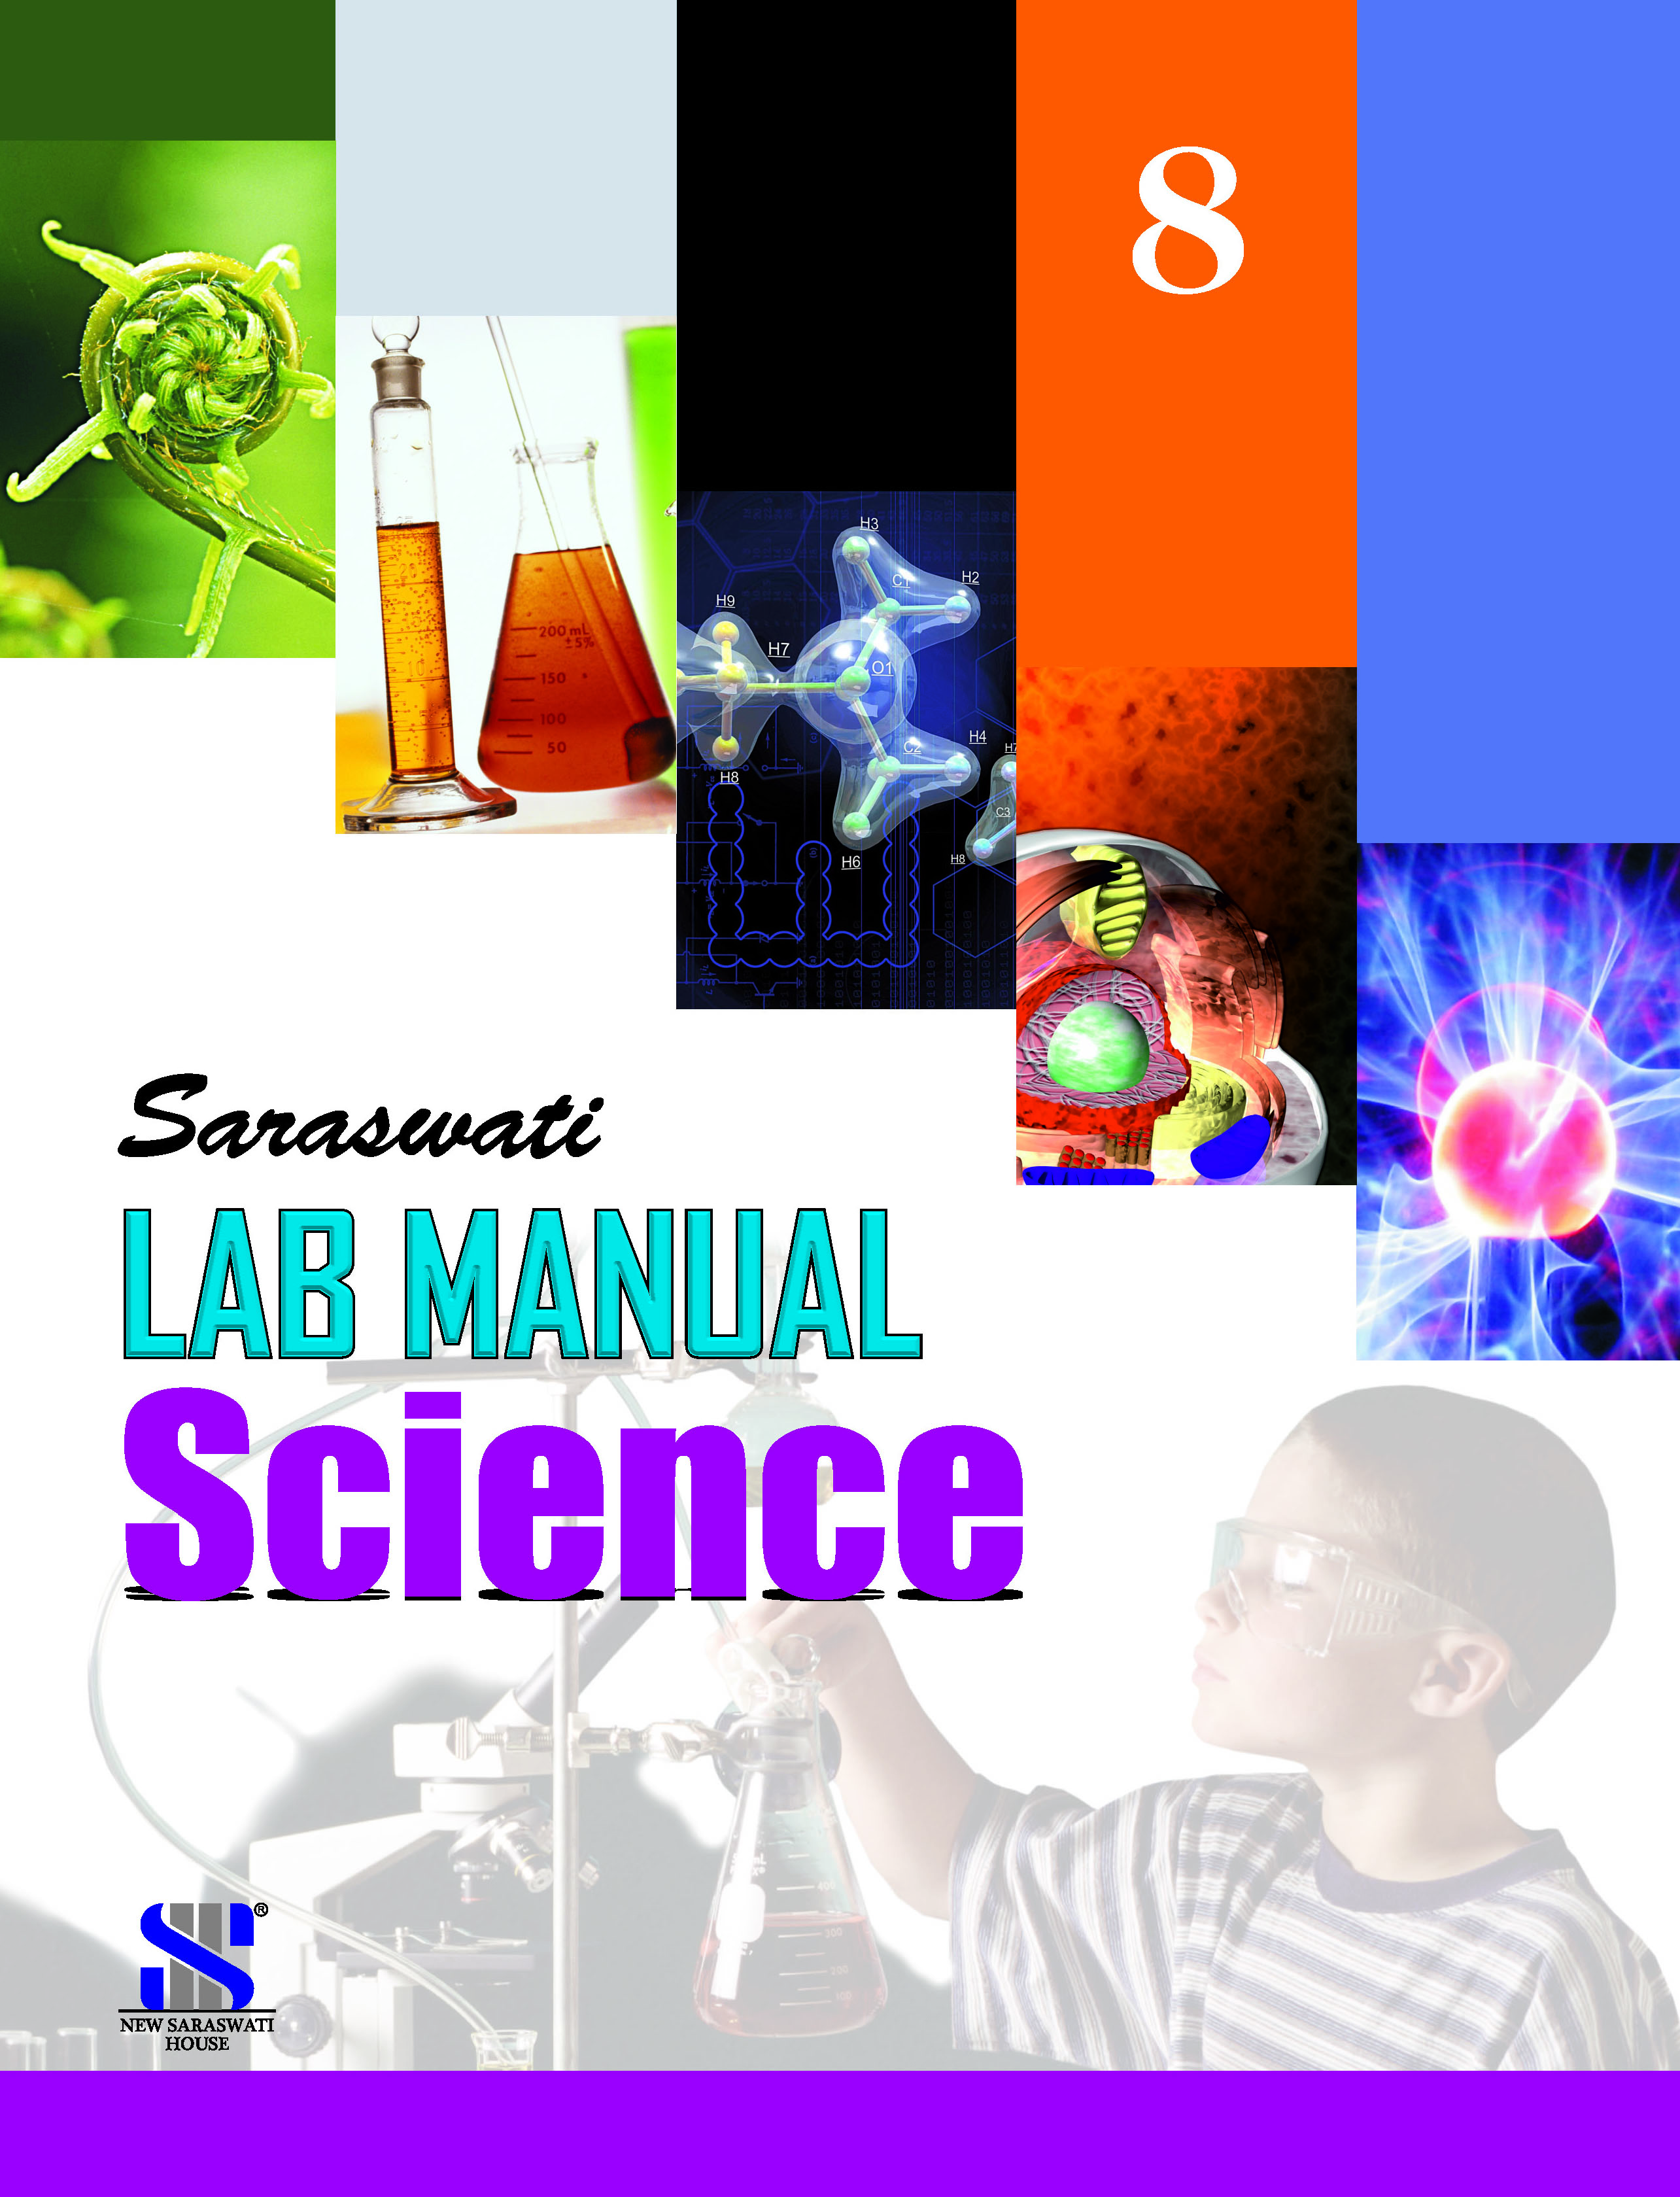 Lab Manual Science-8